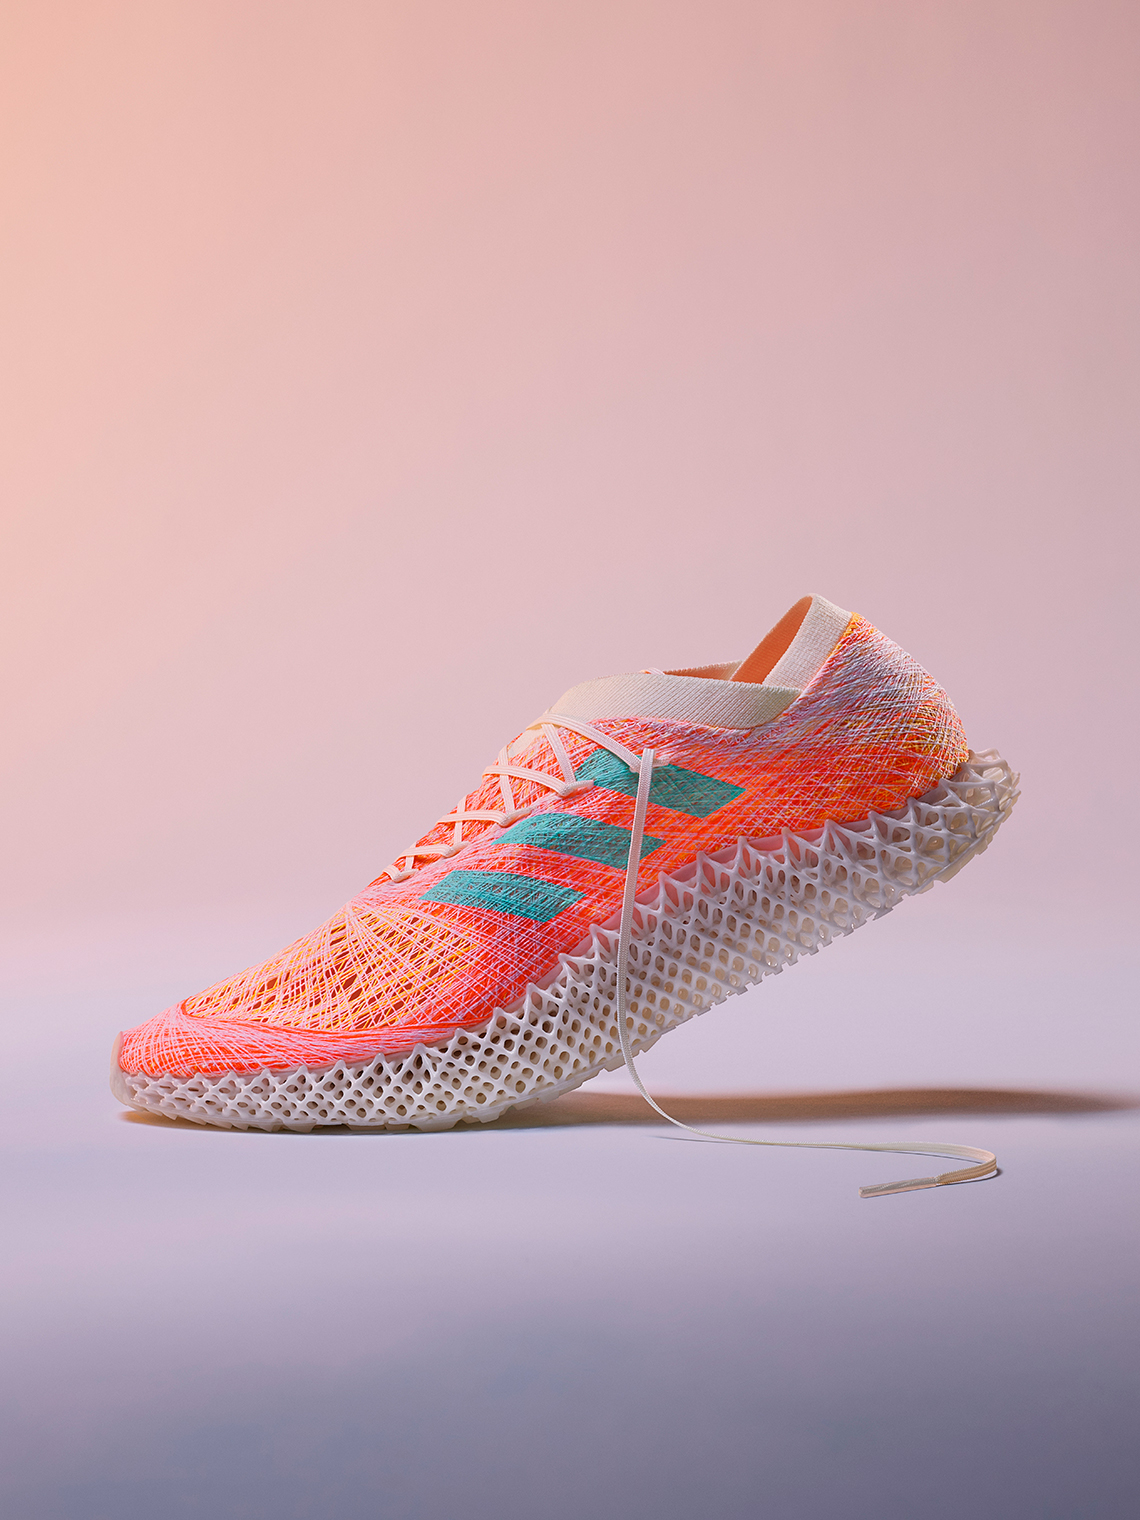 adidas Futurecraft STRUNG Release Date | SneakerNews.com